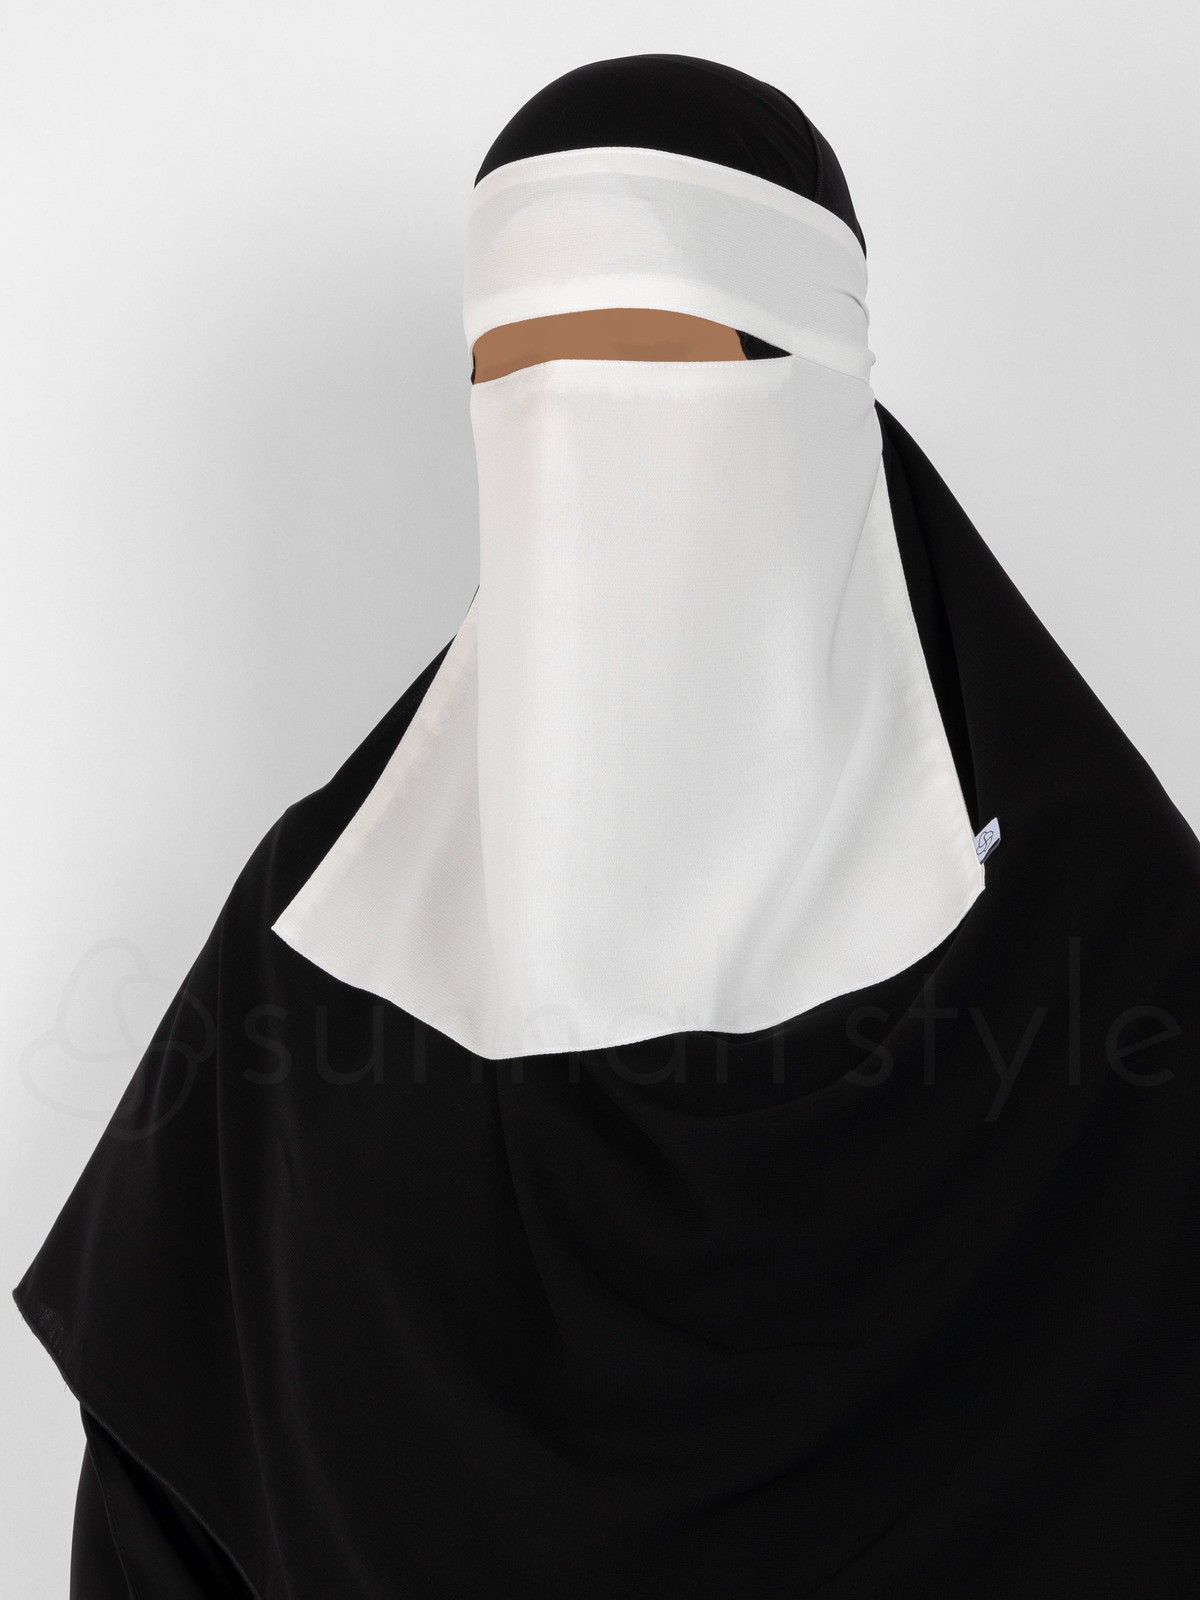 Sunnah Style - Short One Layer Niqab (Parfait)